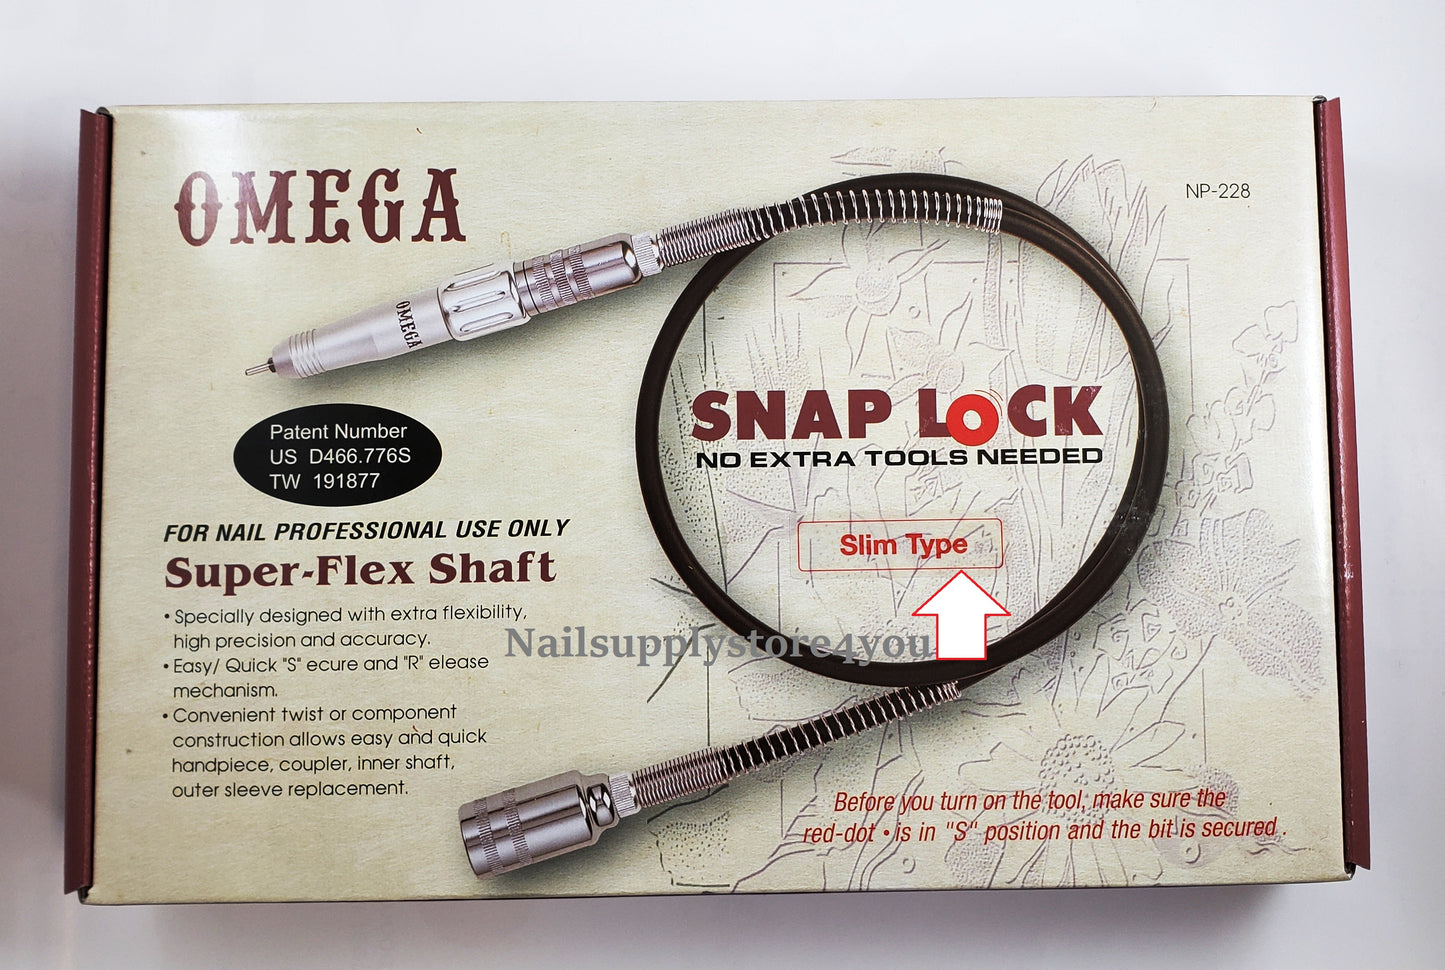 OMEGA - Nail Professional Super Flex Shaft Snap Lock Nail Drill 3/32" Shank (SLIM TYPE)